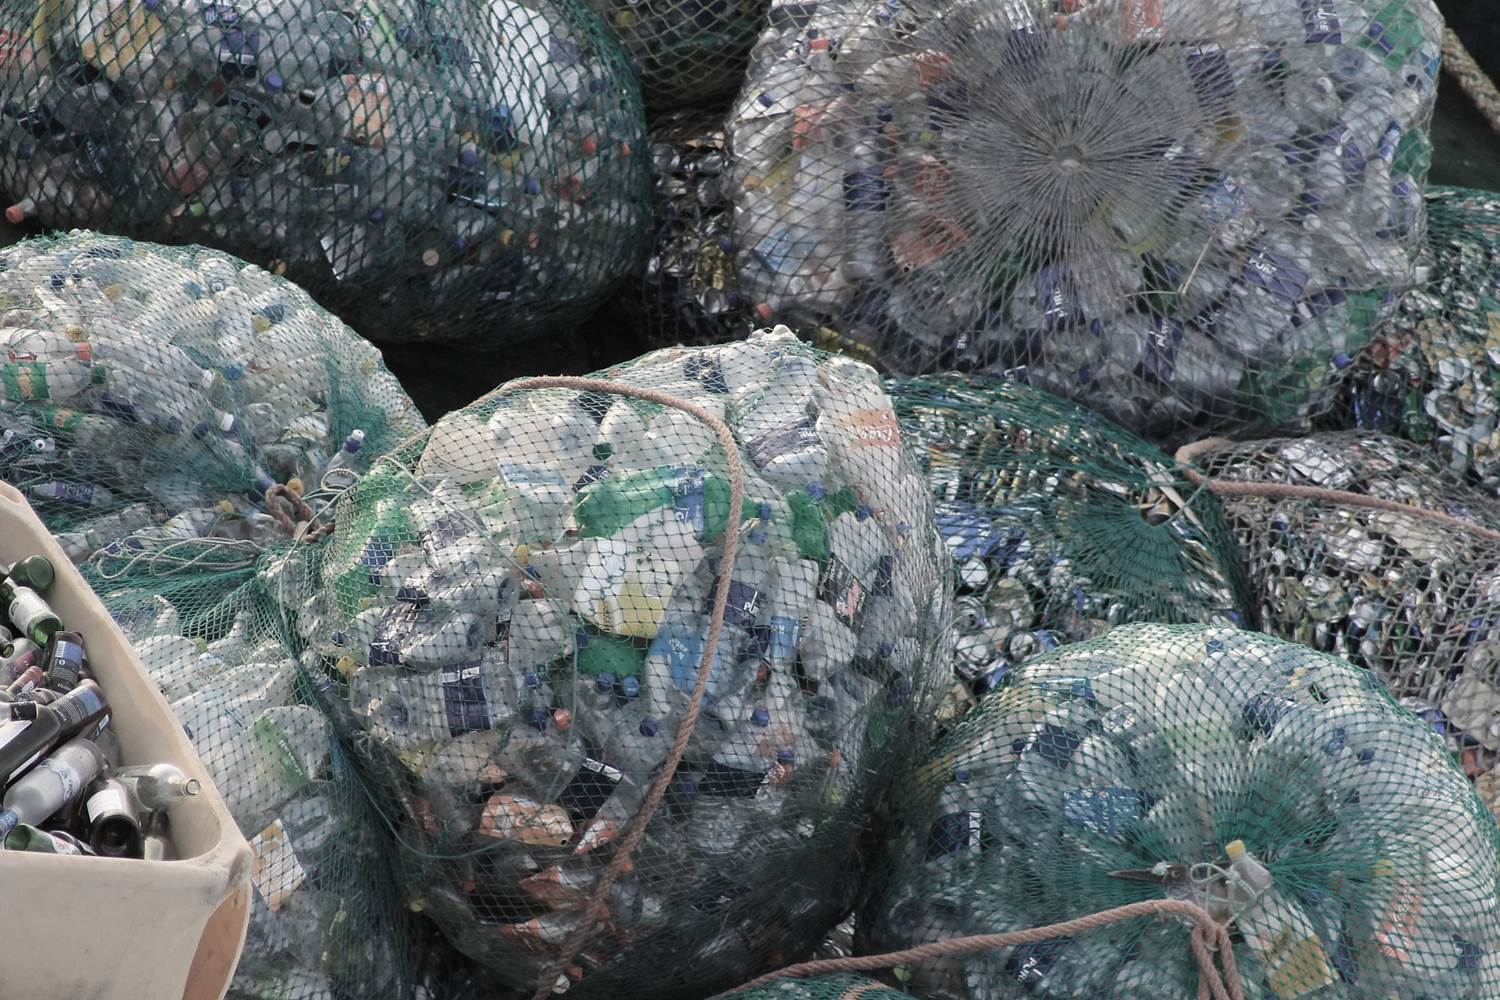 Plastic bottles in mesh bags